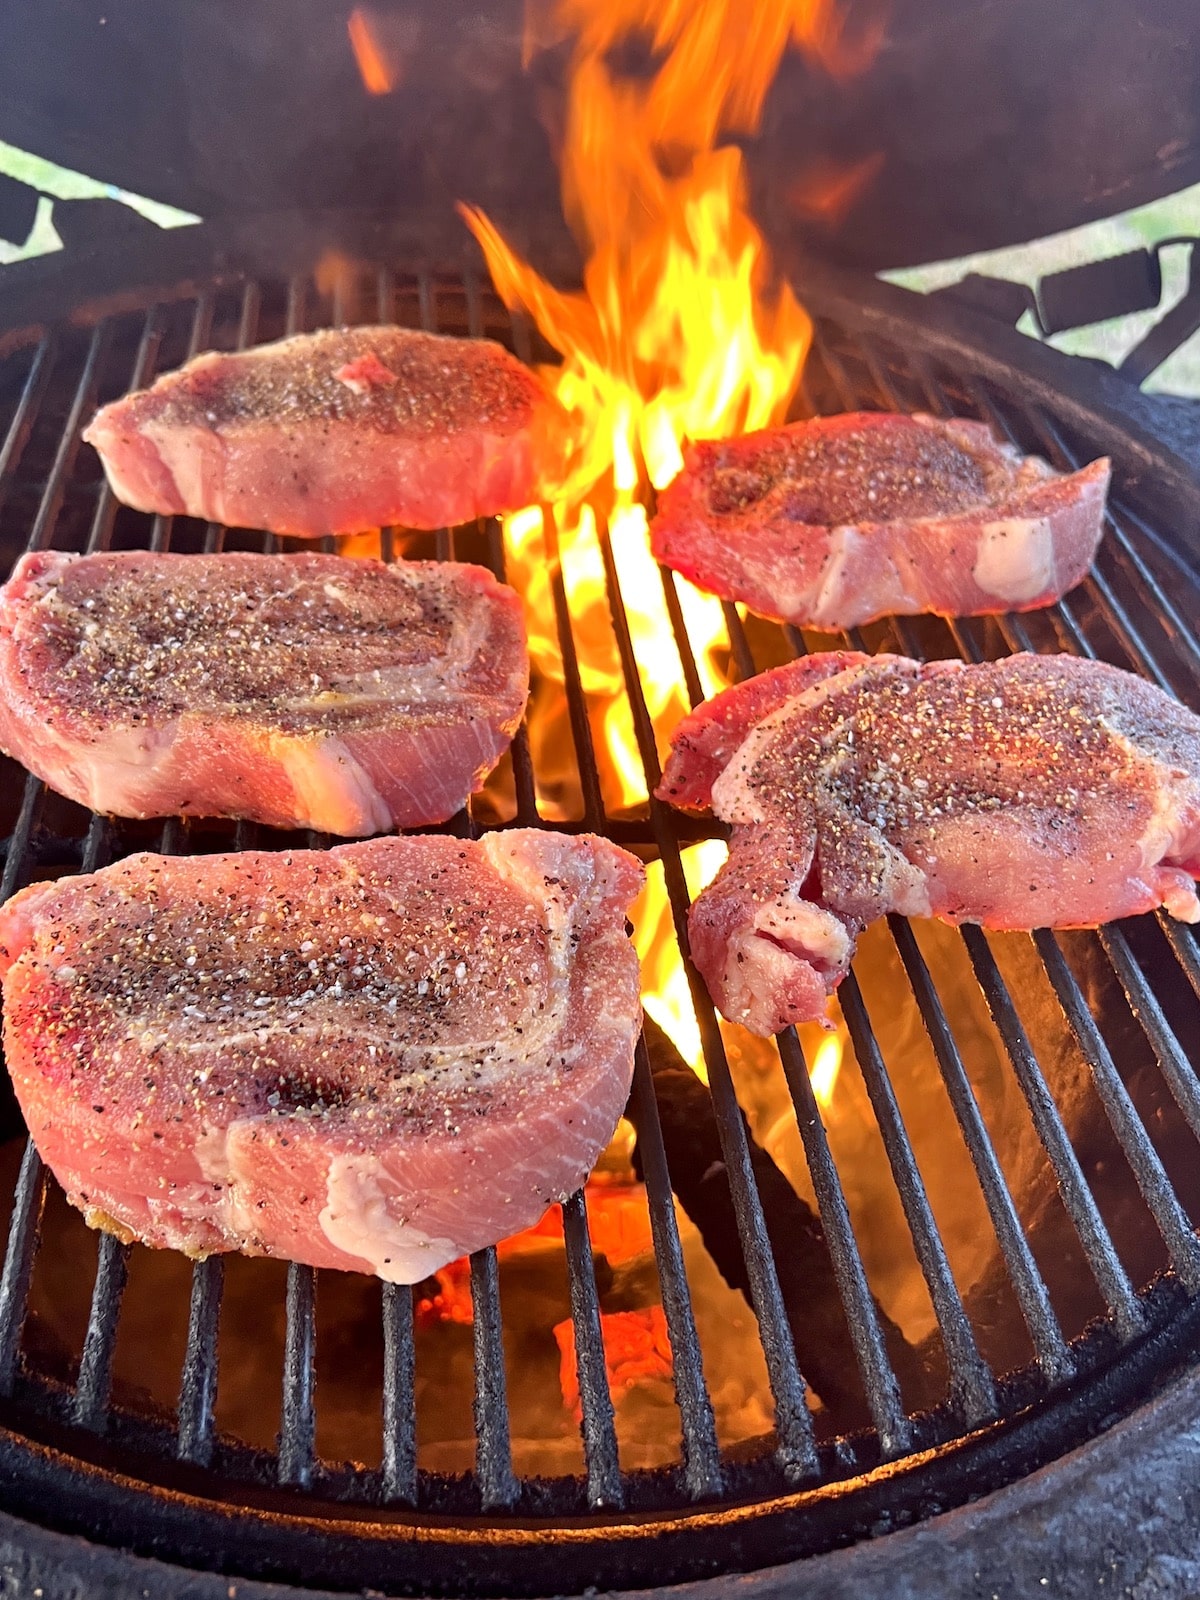 Grilling pork chops - fire flaming.